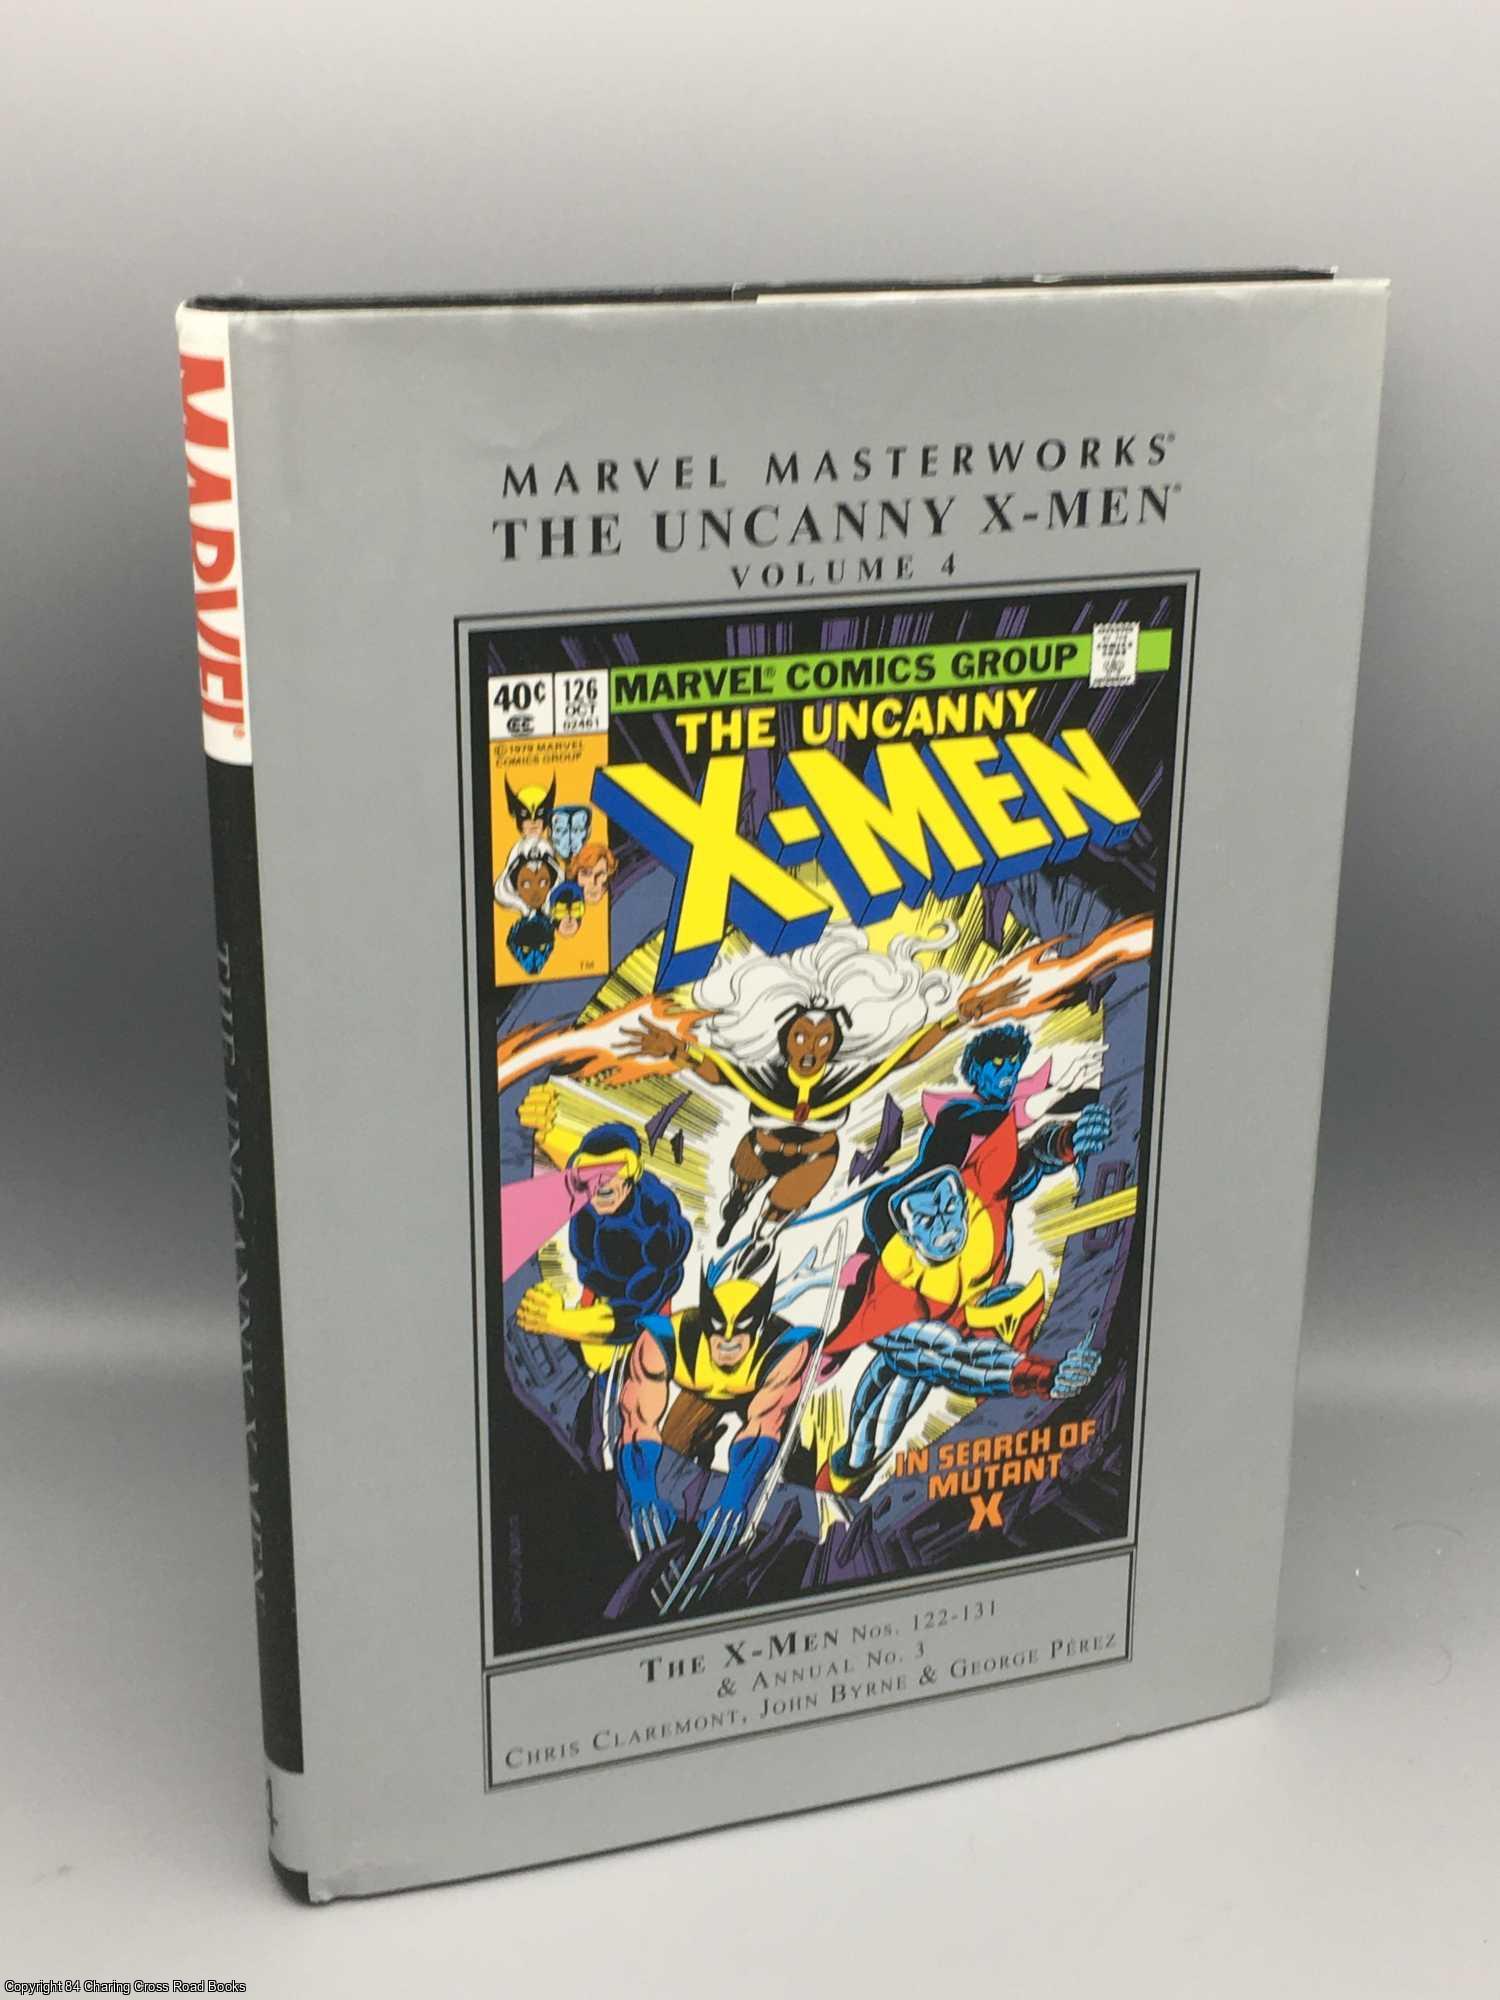 Claremont, Chris - Marvel Masterworks Uncanny X-Men Volume 4